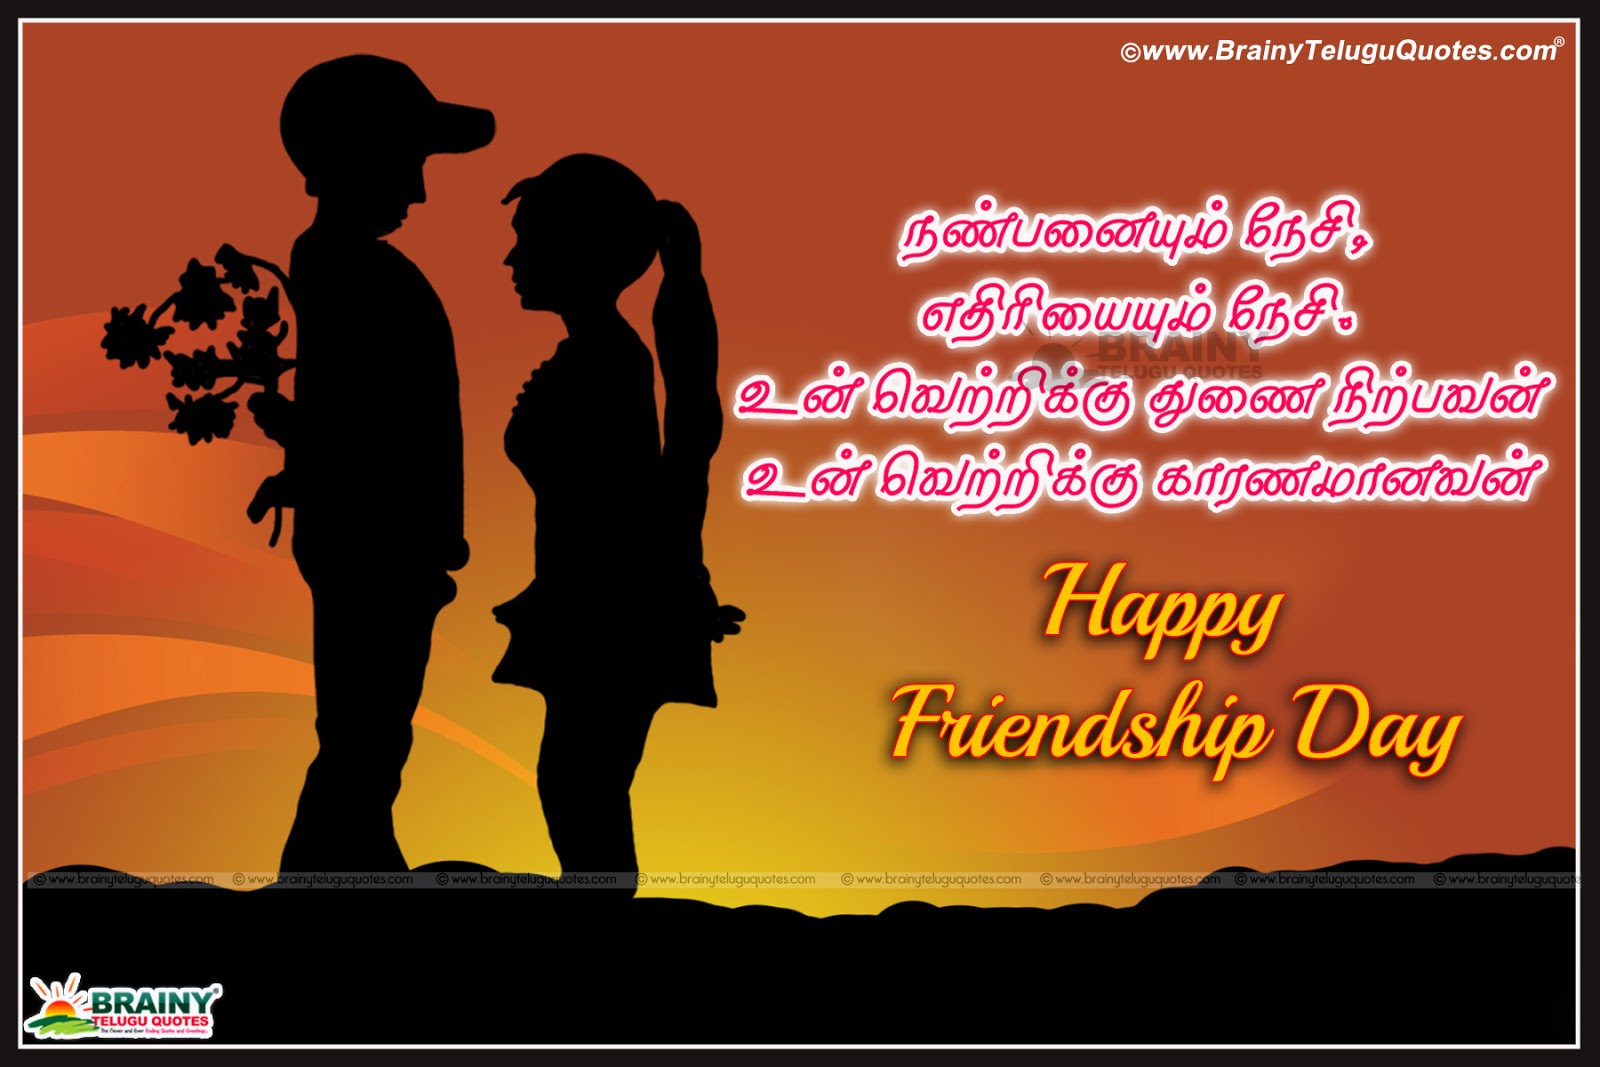 Best Friendship Day Tamil Kavithai Image HD wallpaper. BrainyTeluguQuotes.comTelugu quotes. English quotes. Hindi quotes. Tamil quotes. Greetings